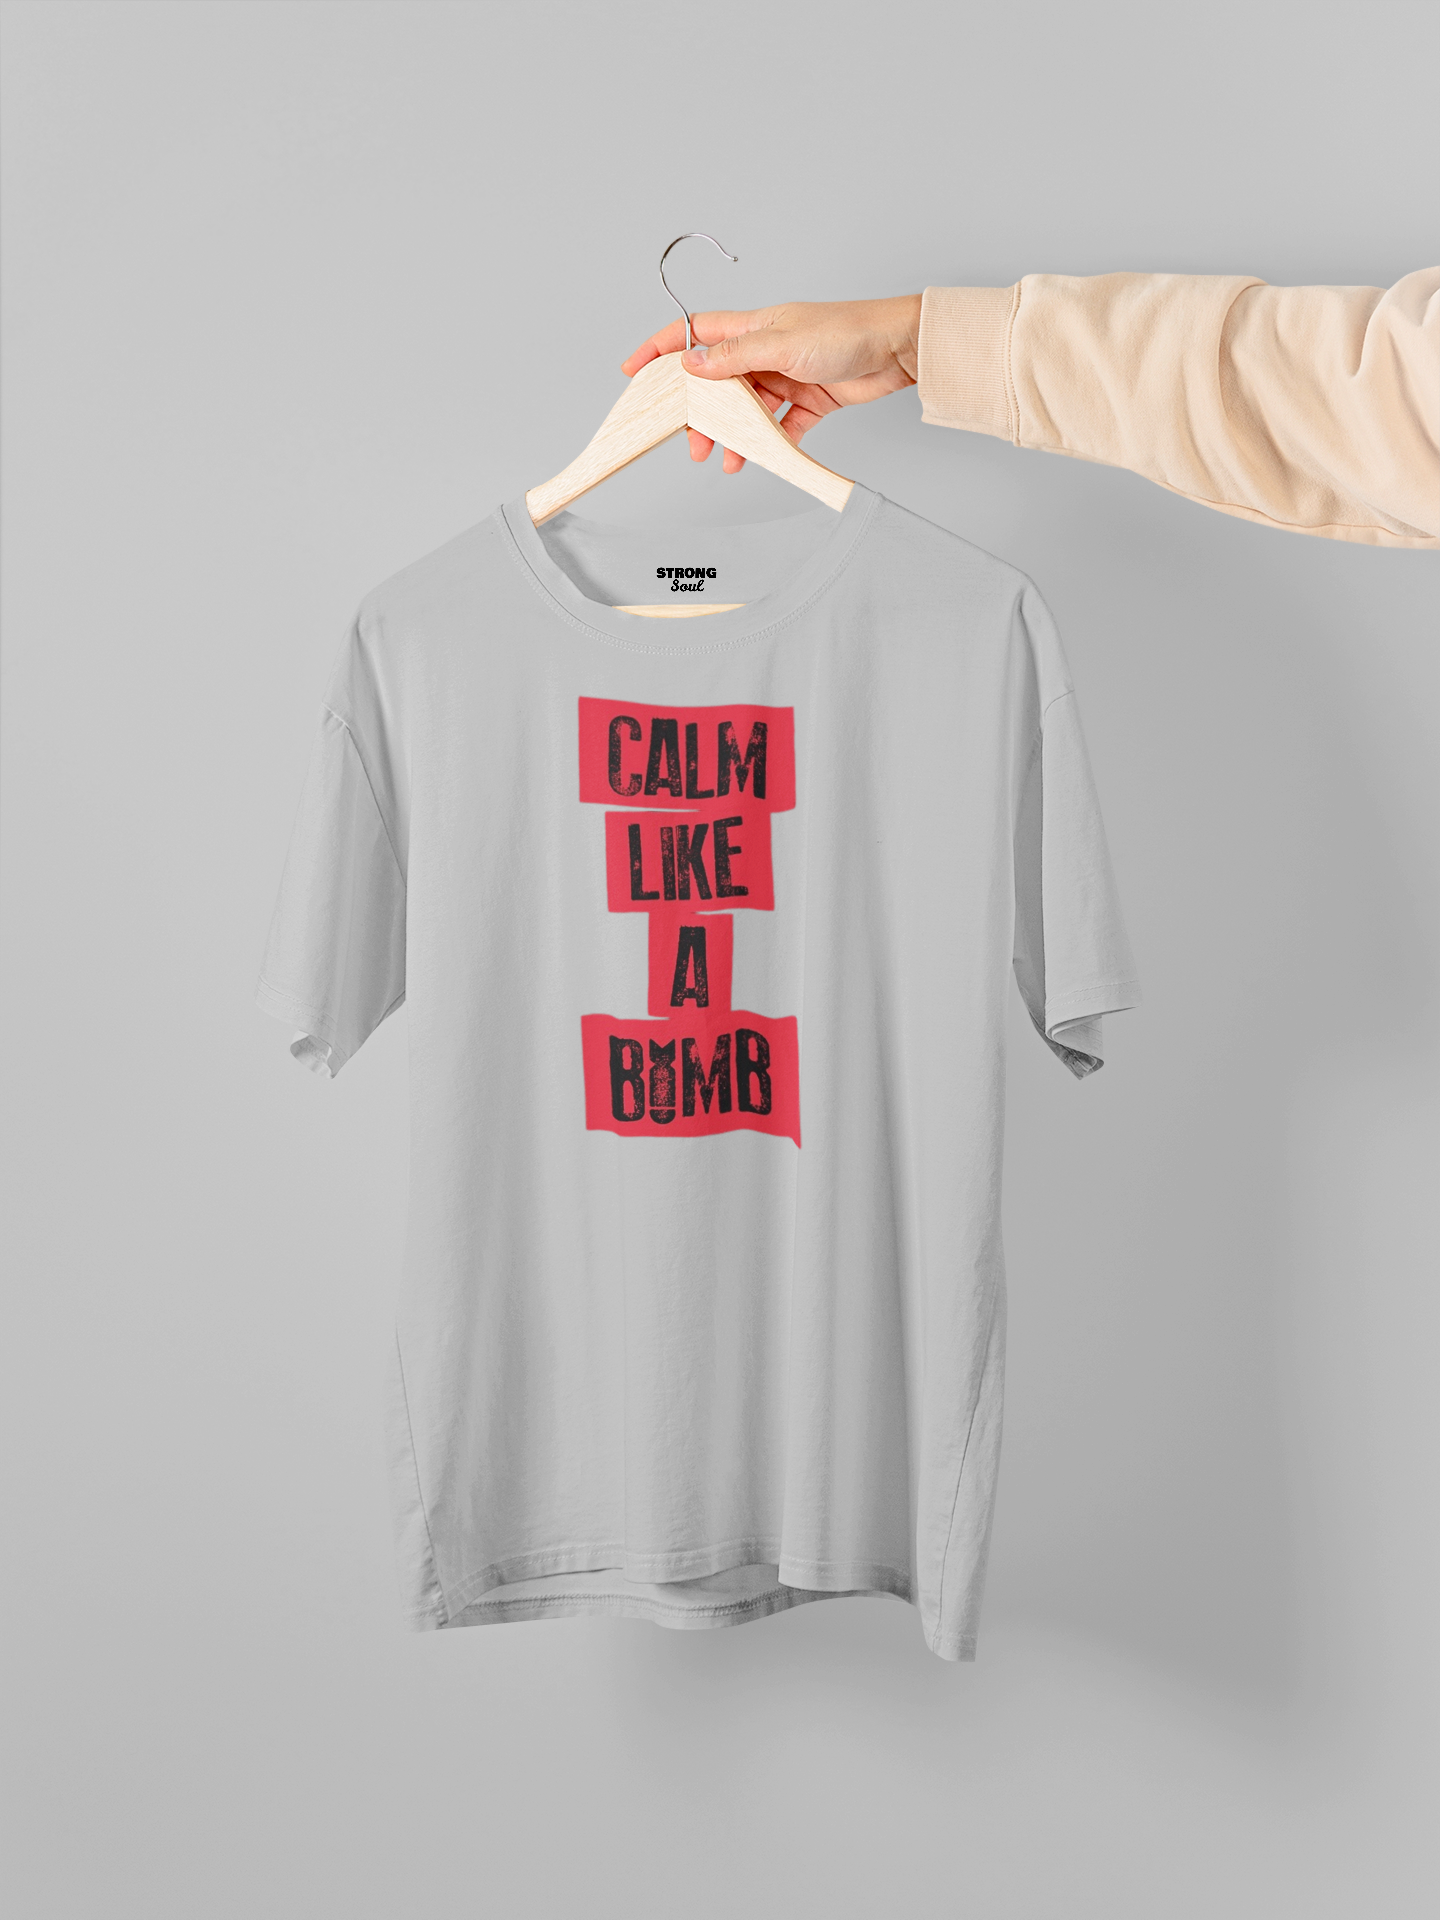 Calm Like A Bomb - Gym T Shirt Strong Soul Shirts & Tops